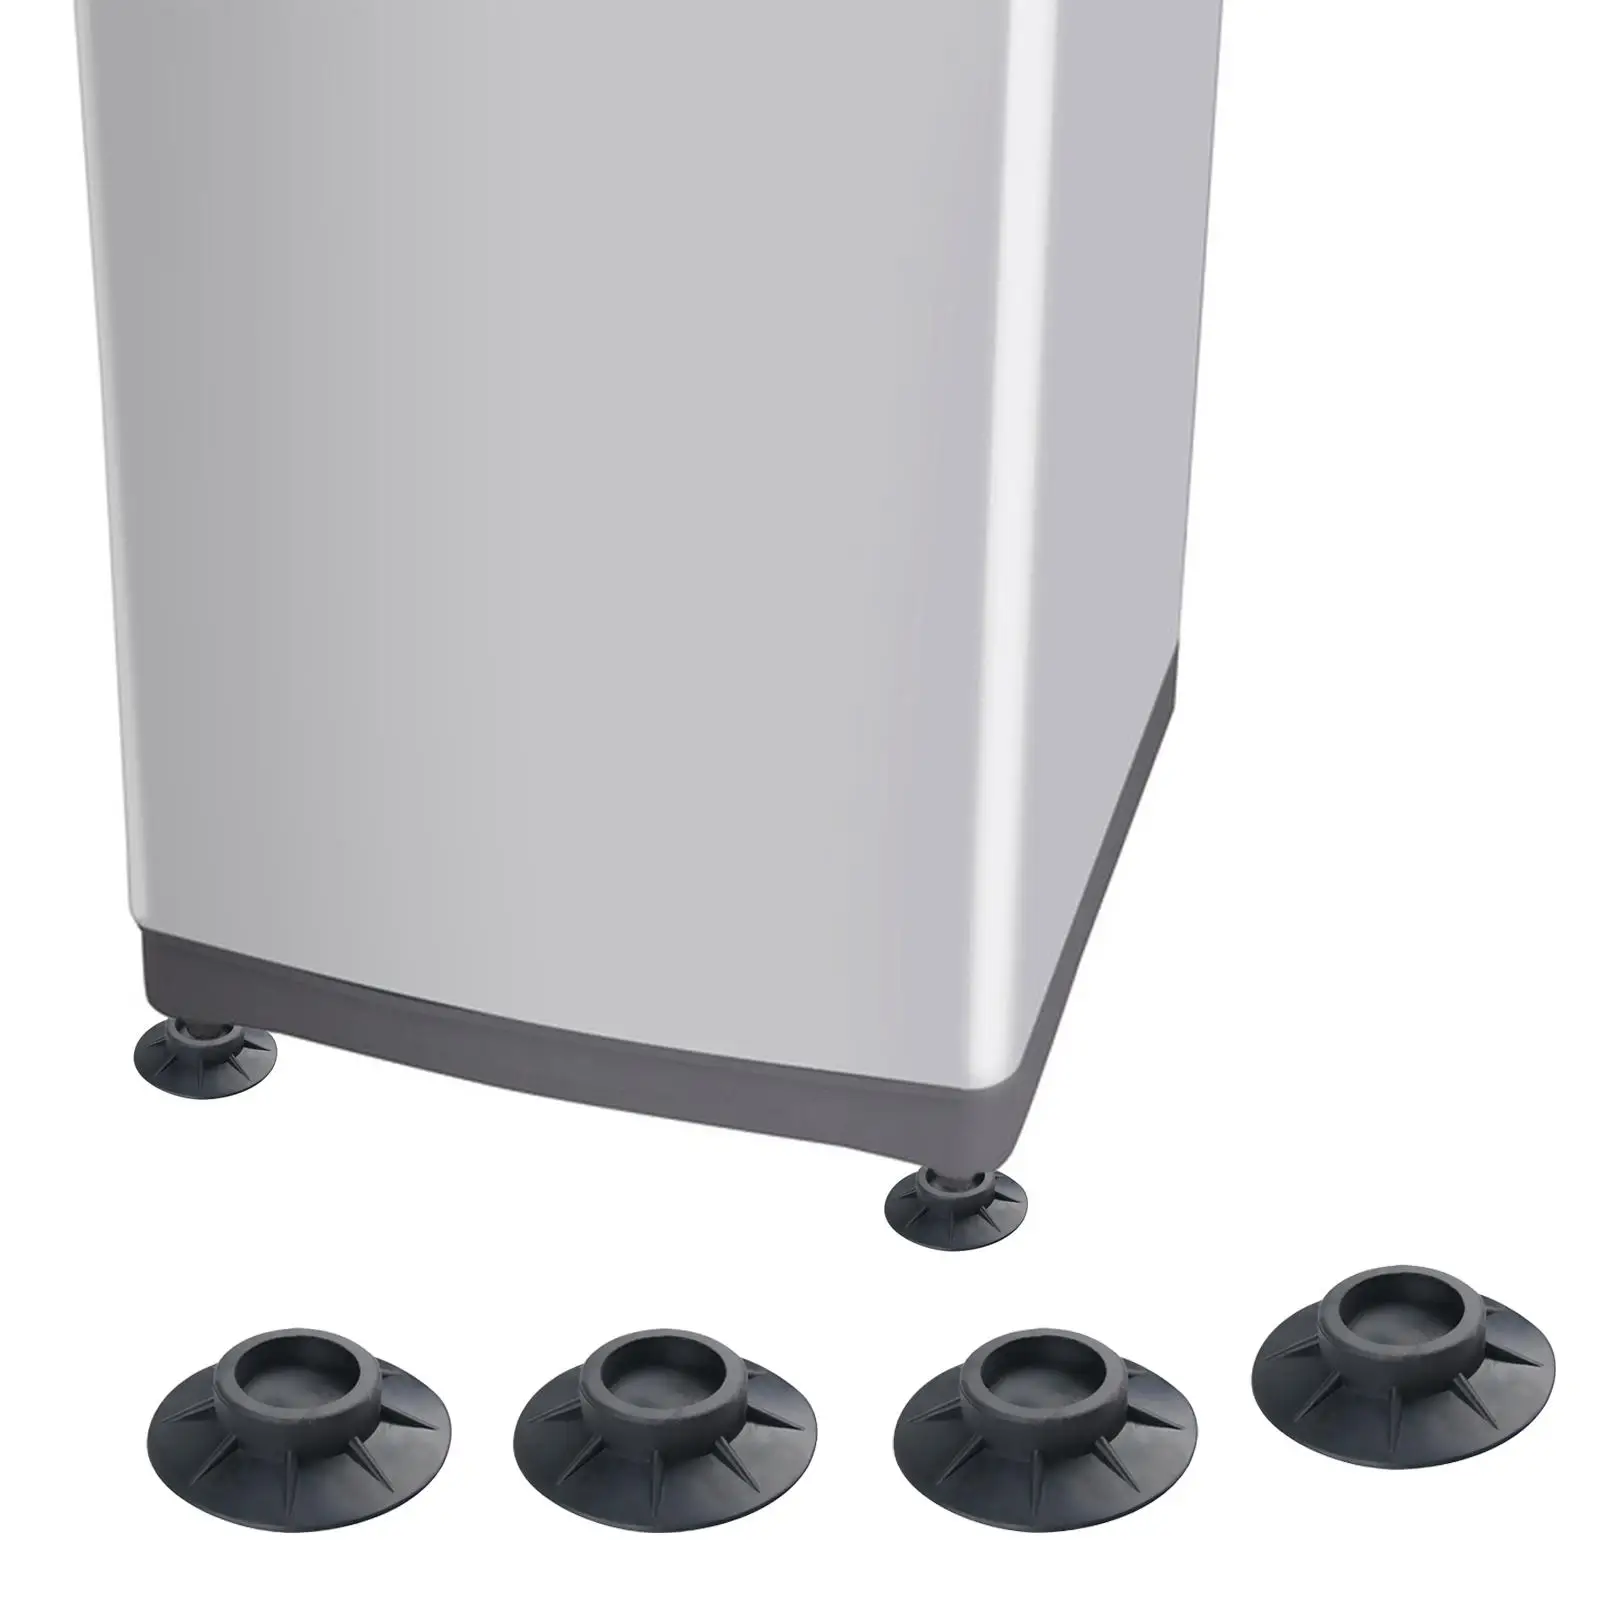 Set of 4 Washing Machine Feet Moisture Mats Noise Dampening Slipstops Stand Rubber Dryer Pedestals for Furniture Dishwashers